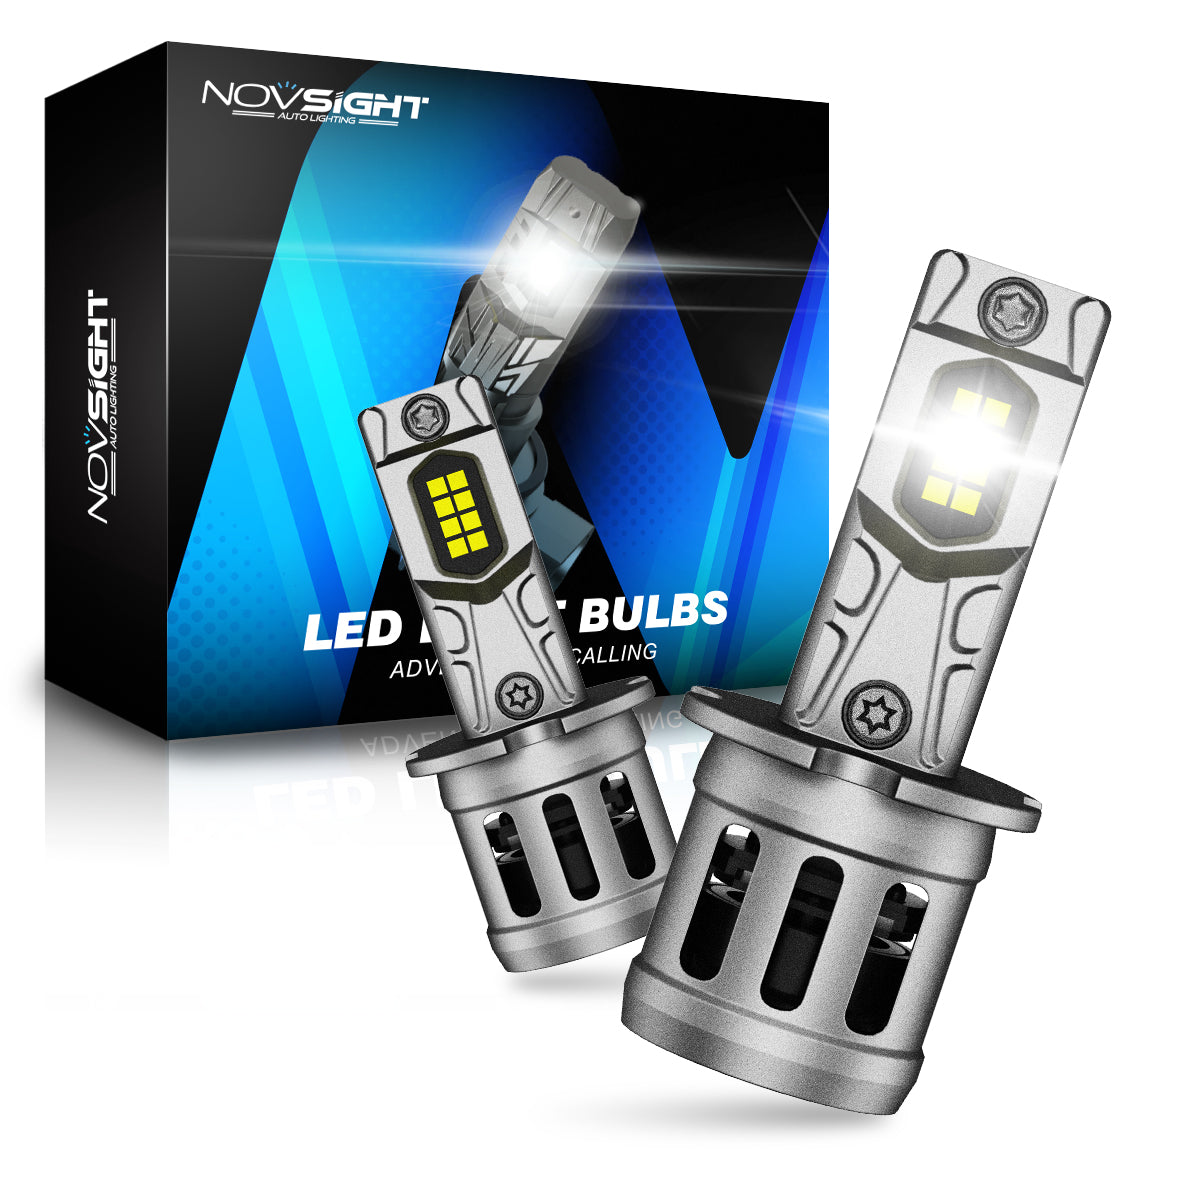 N63 actualizado Mini serie 1:1 inalámbrico | Bombillas LED H3 Tamaño mini original Luces antiniebla de 90 W | 2 bombillas